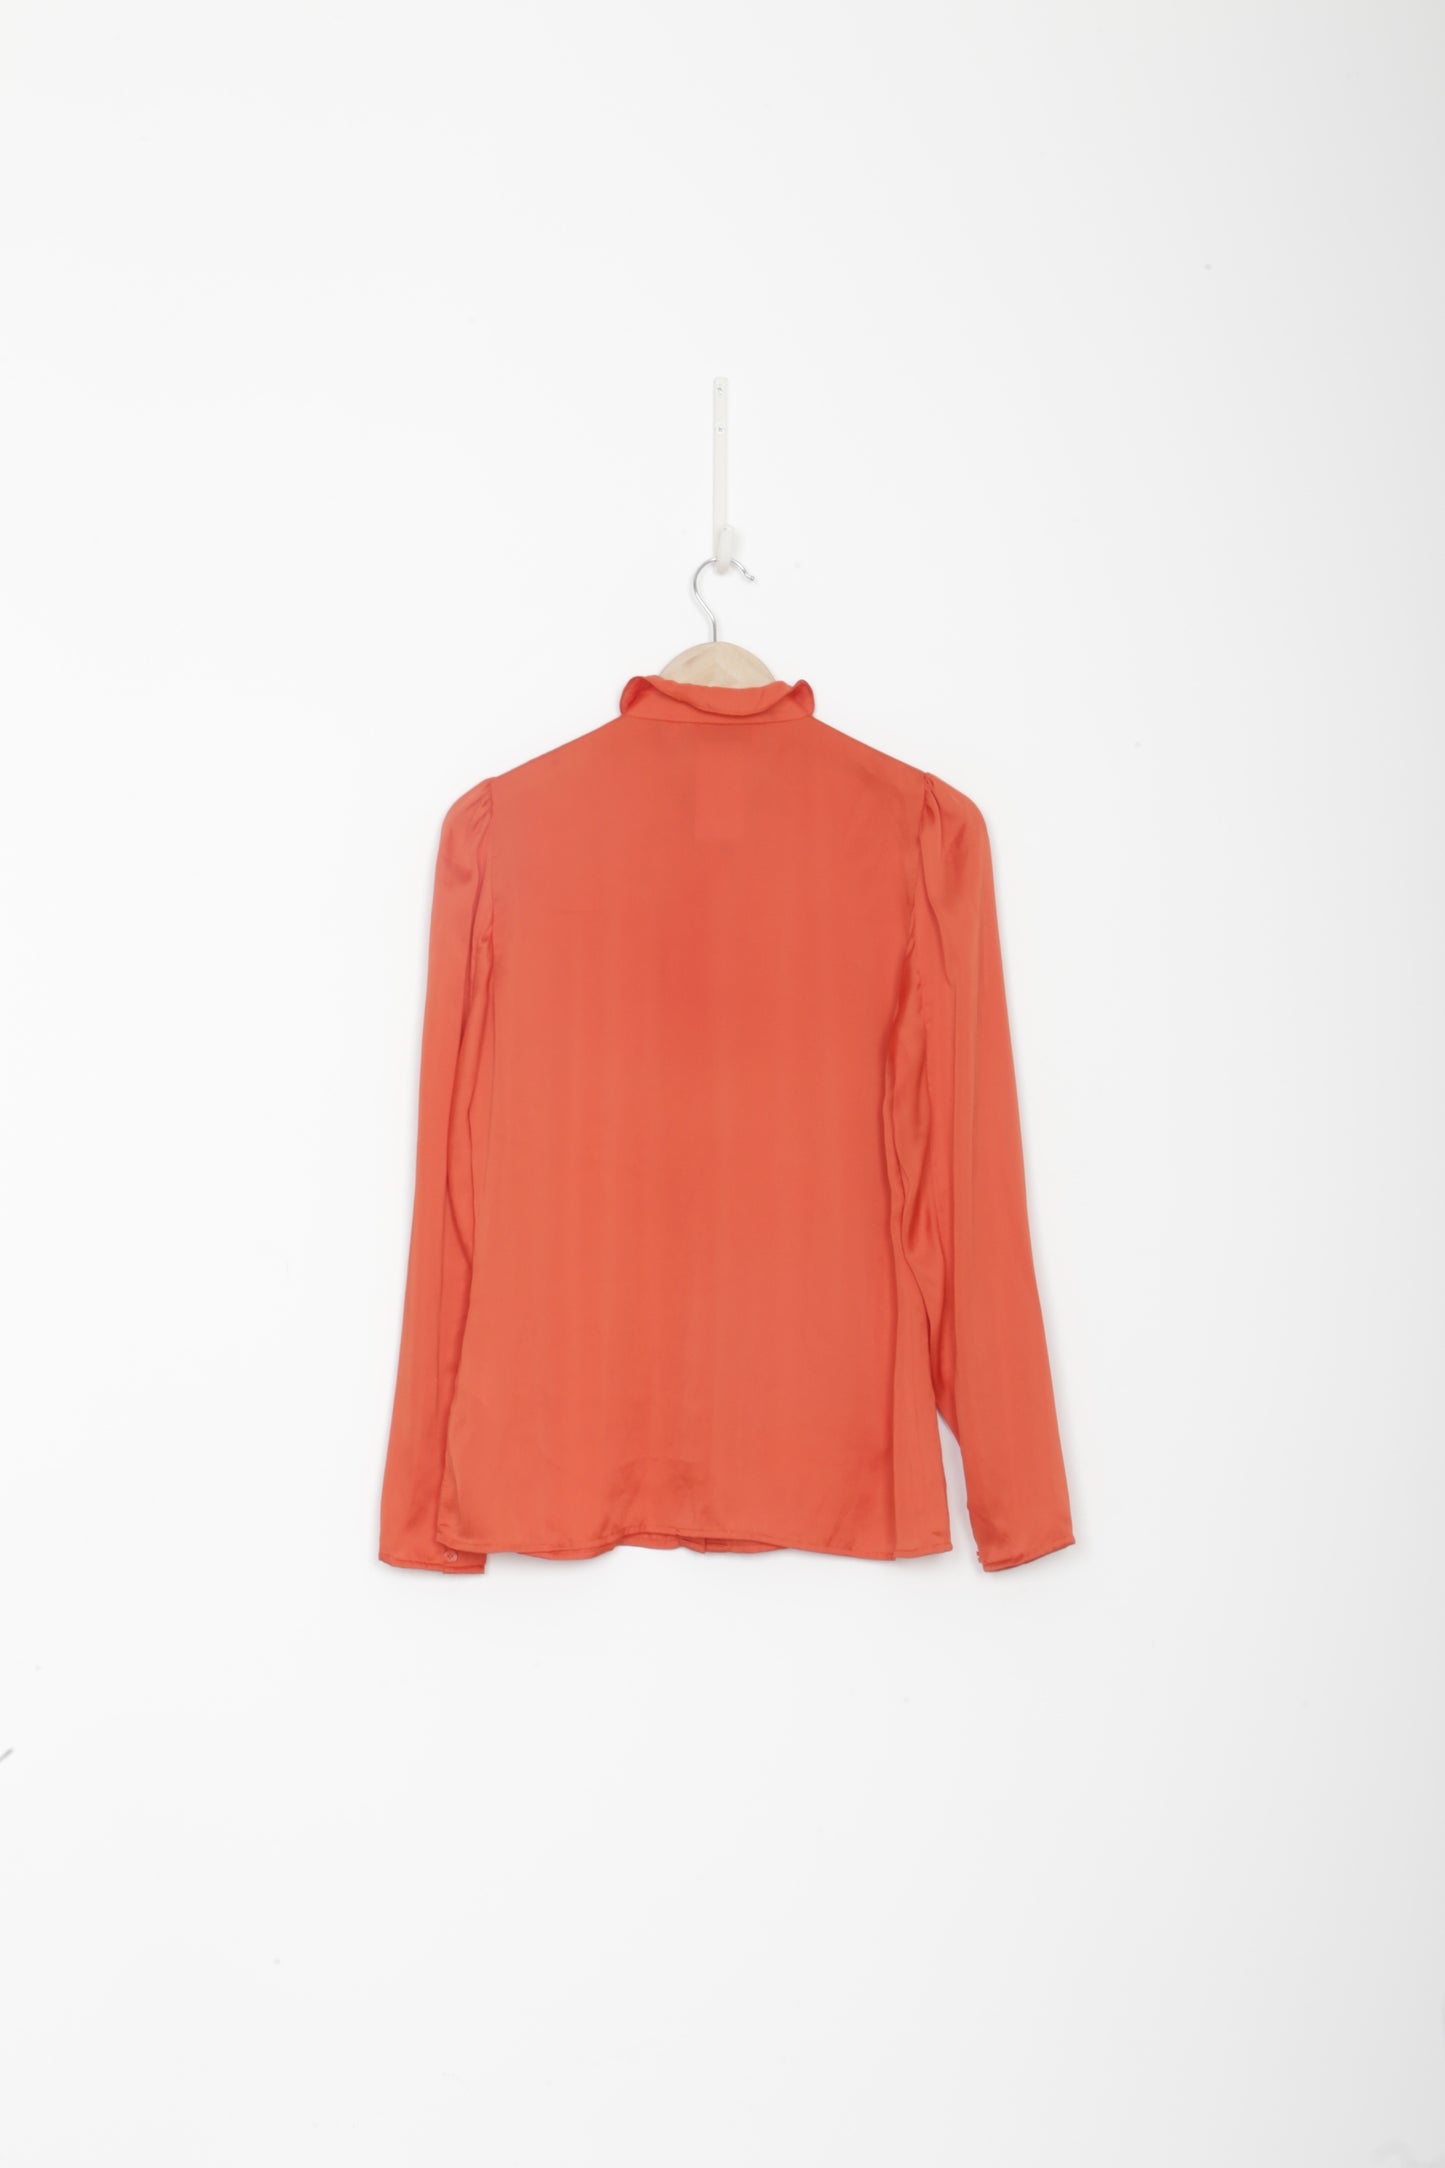 Reiss Womens Orange Shirt Size 12